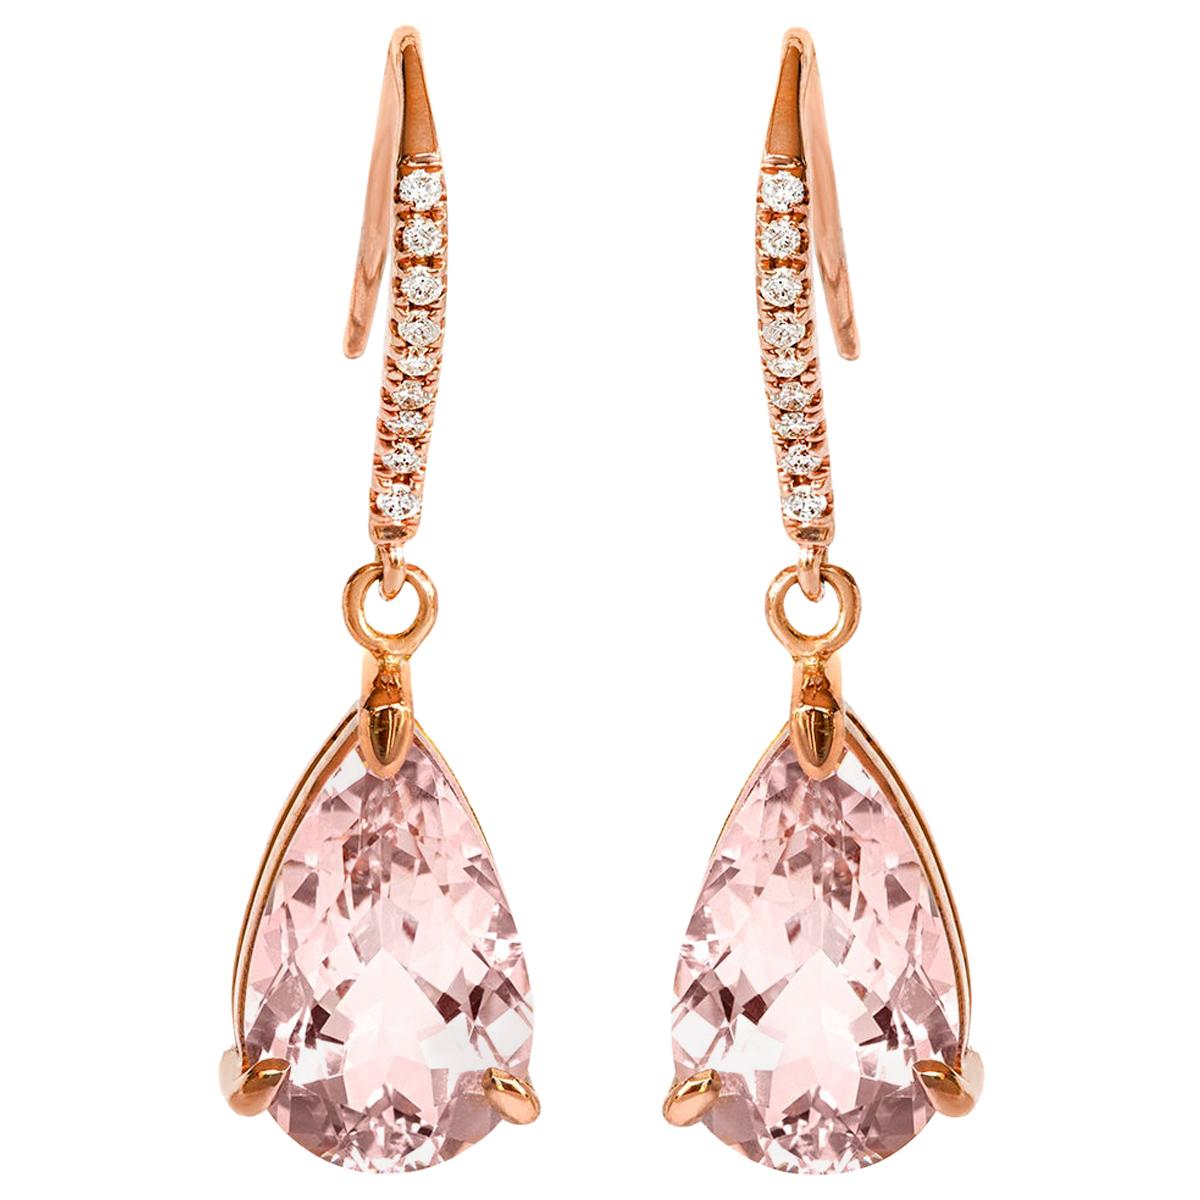 Pear Shaped Morganite and Diamond Drop Earrings Set in 18 Carat Rose Gold